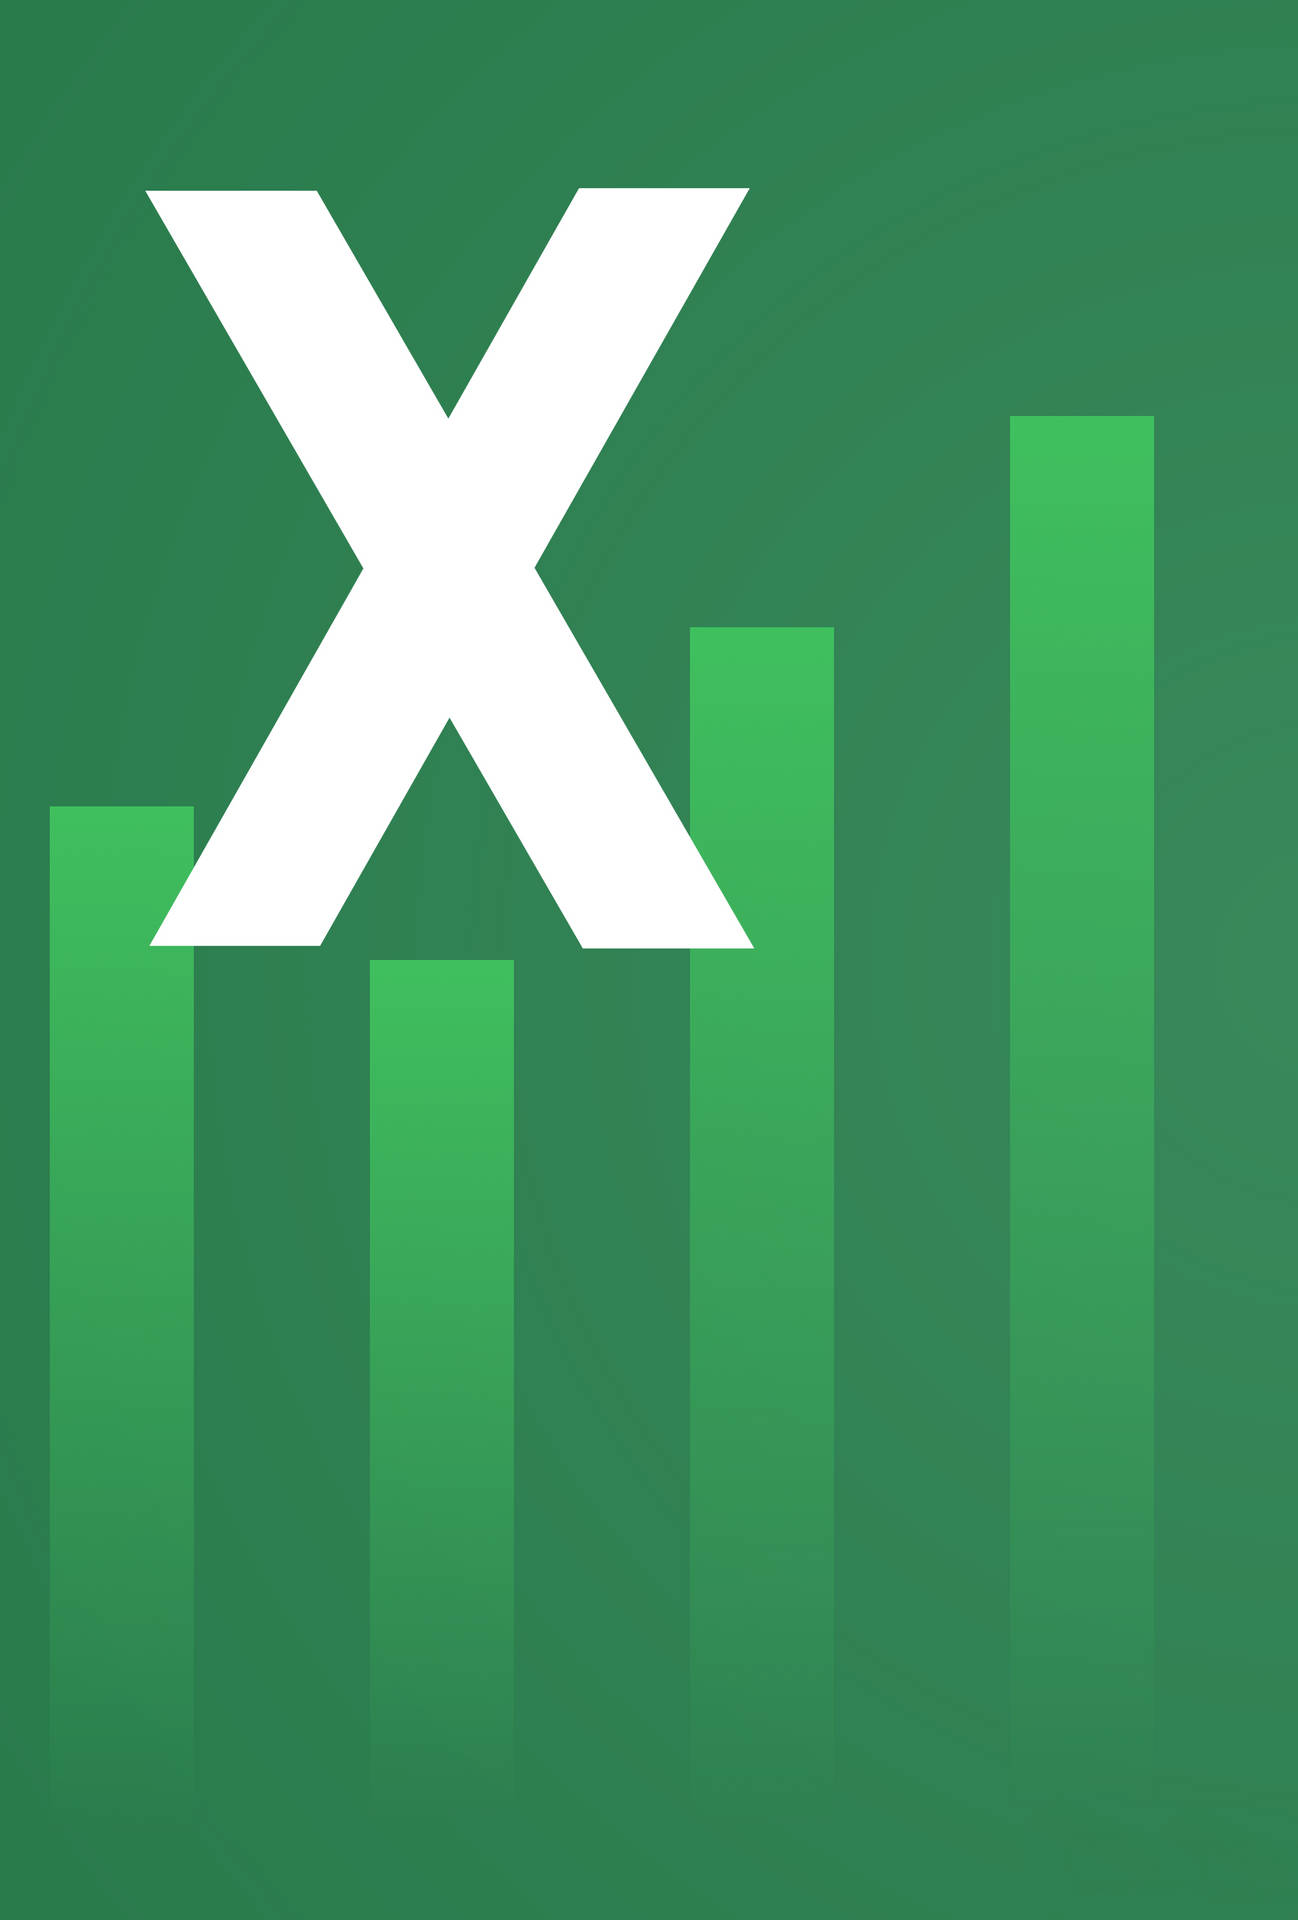 Excel Microsoft Spreadsheet Program Logo Wallpaper